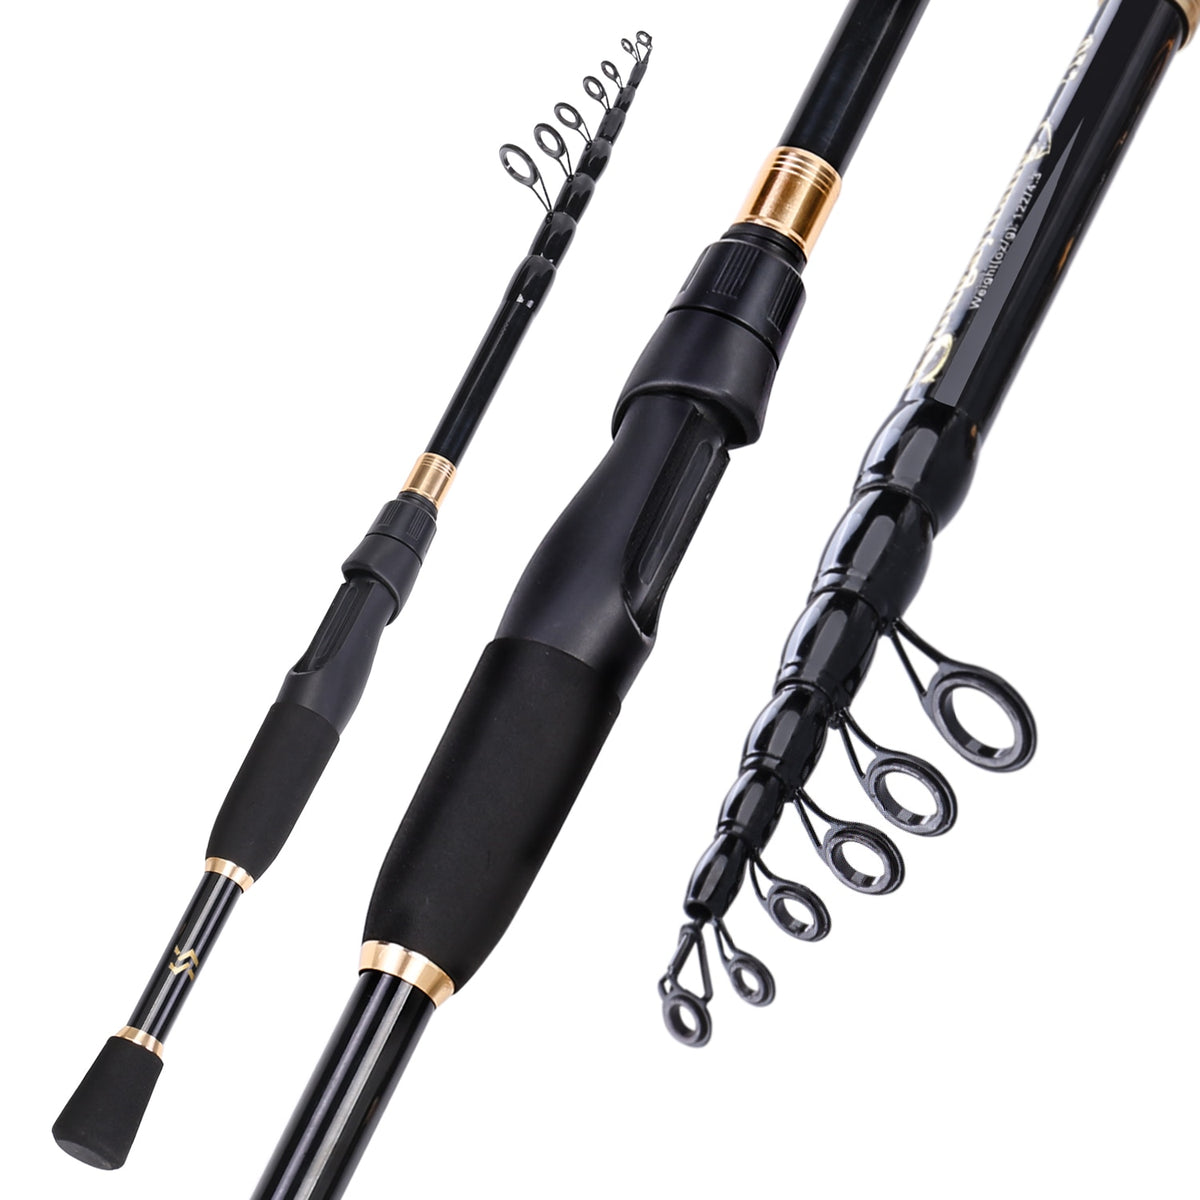 Sougayilang Telescopic Fishing Rod and Reel Combo, Ultralight